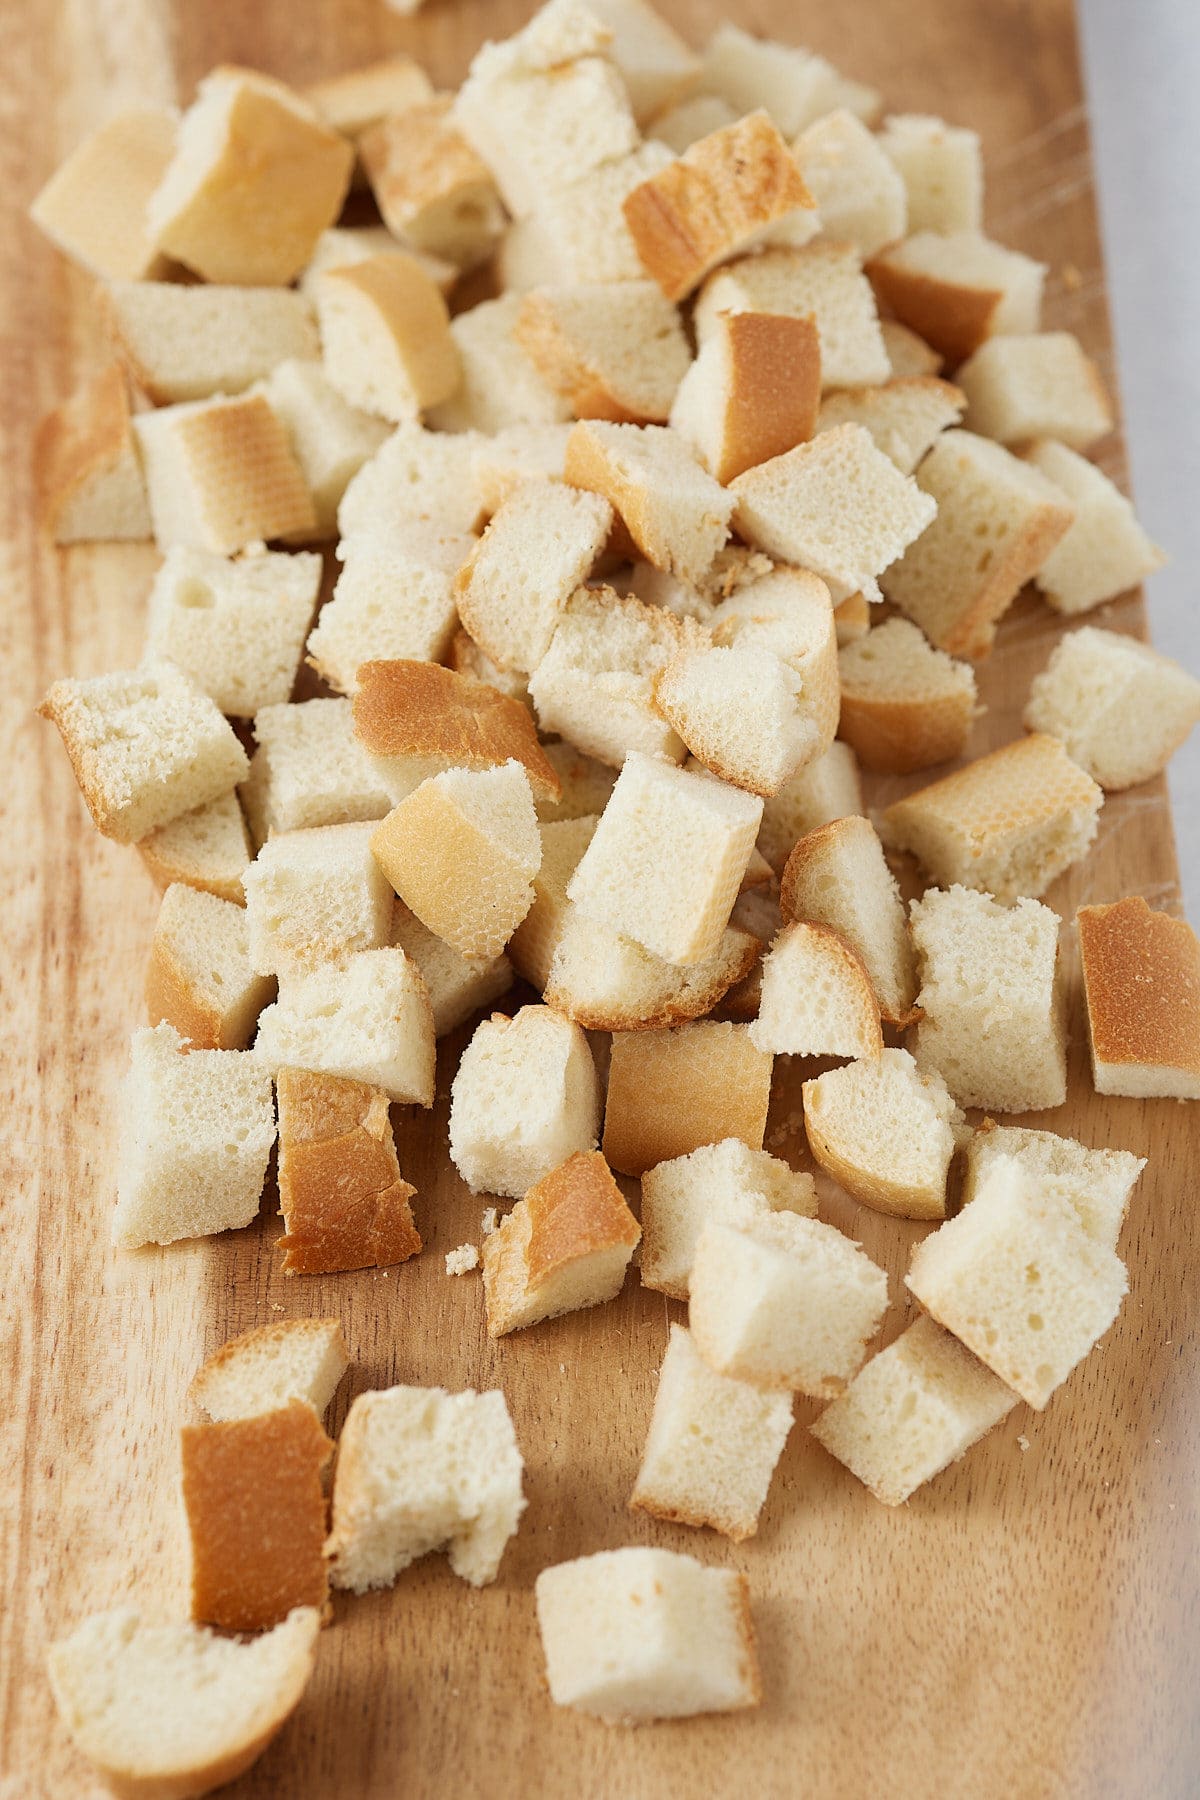 A bread loaf cut into cubes.